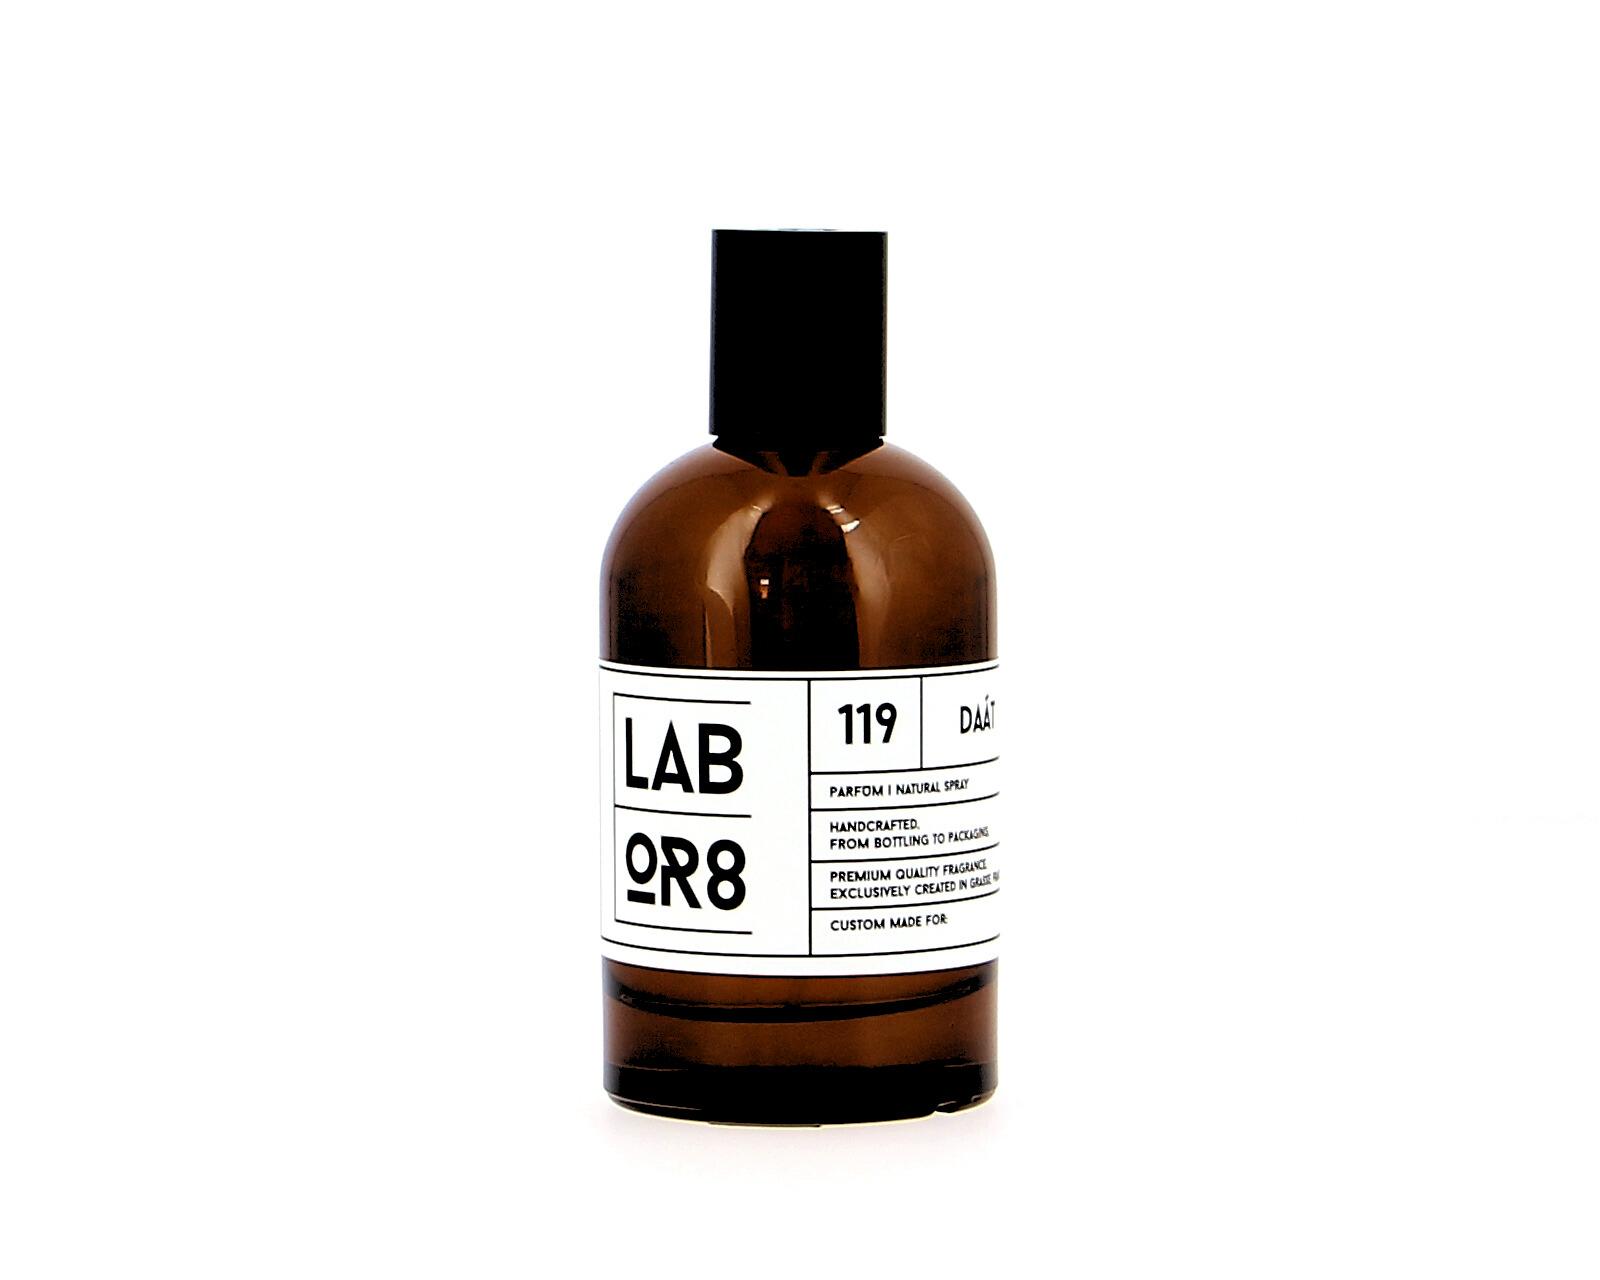 Labor8 Da`at 119 Унисекс парфюмна вода EDP